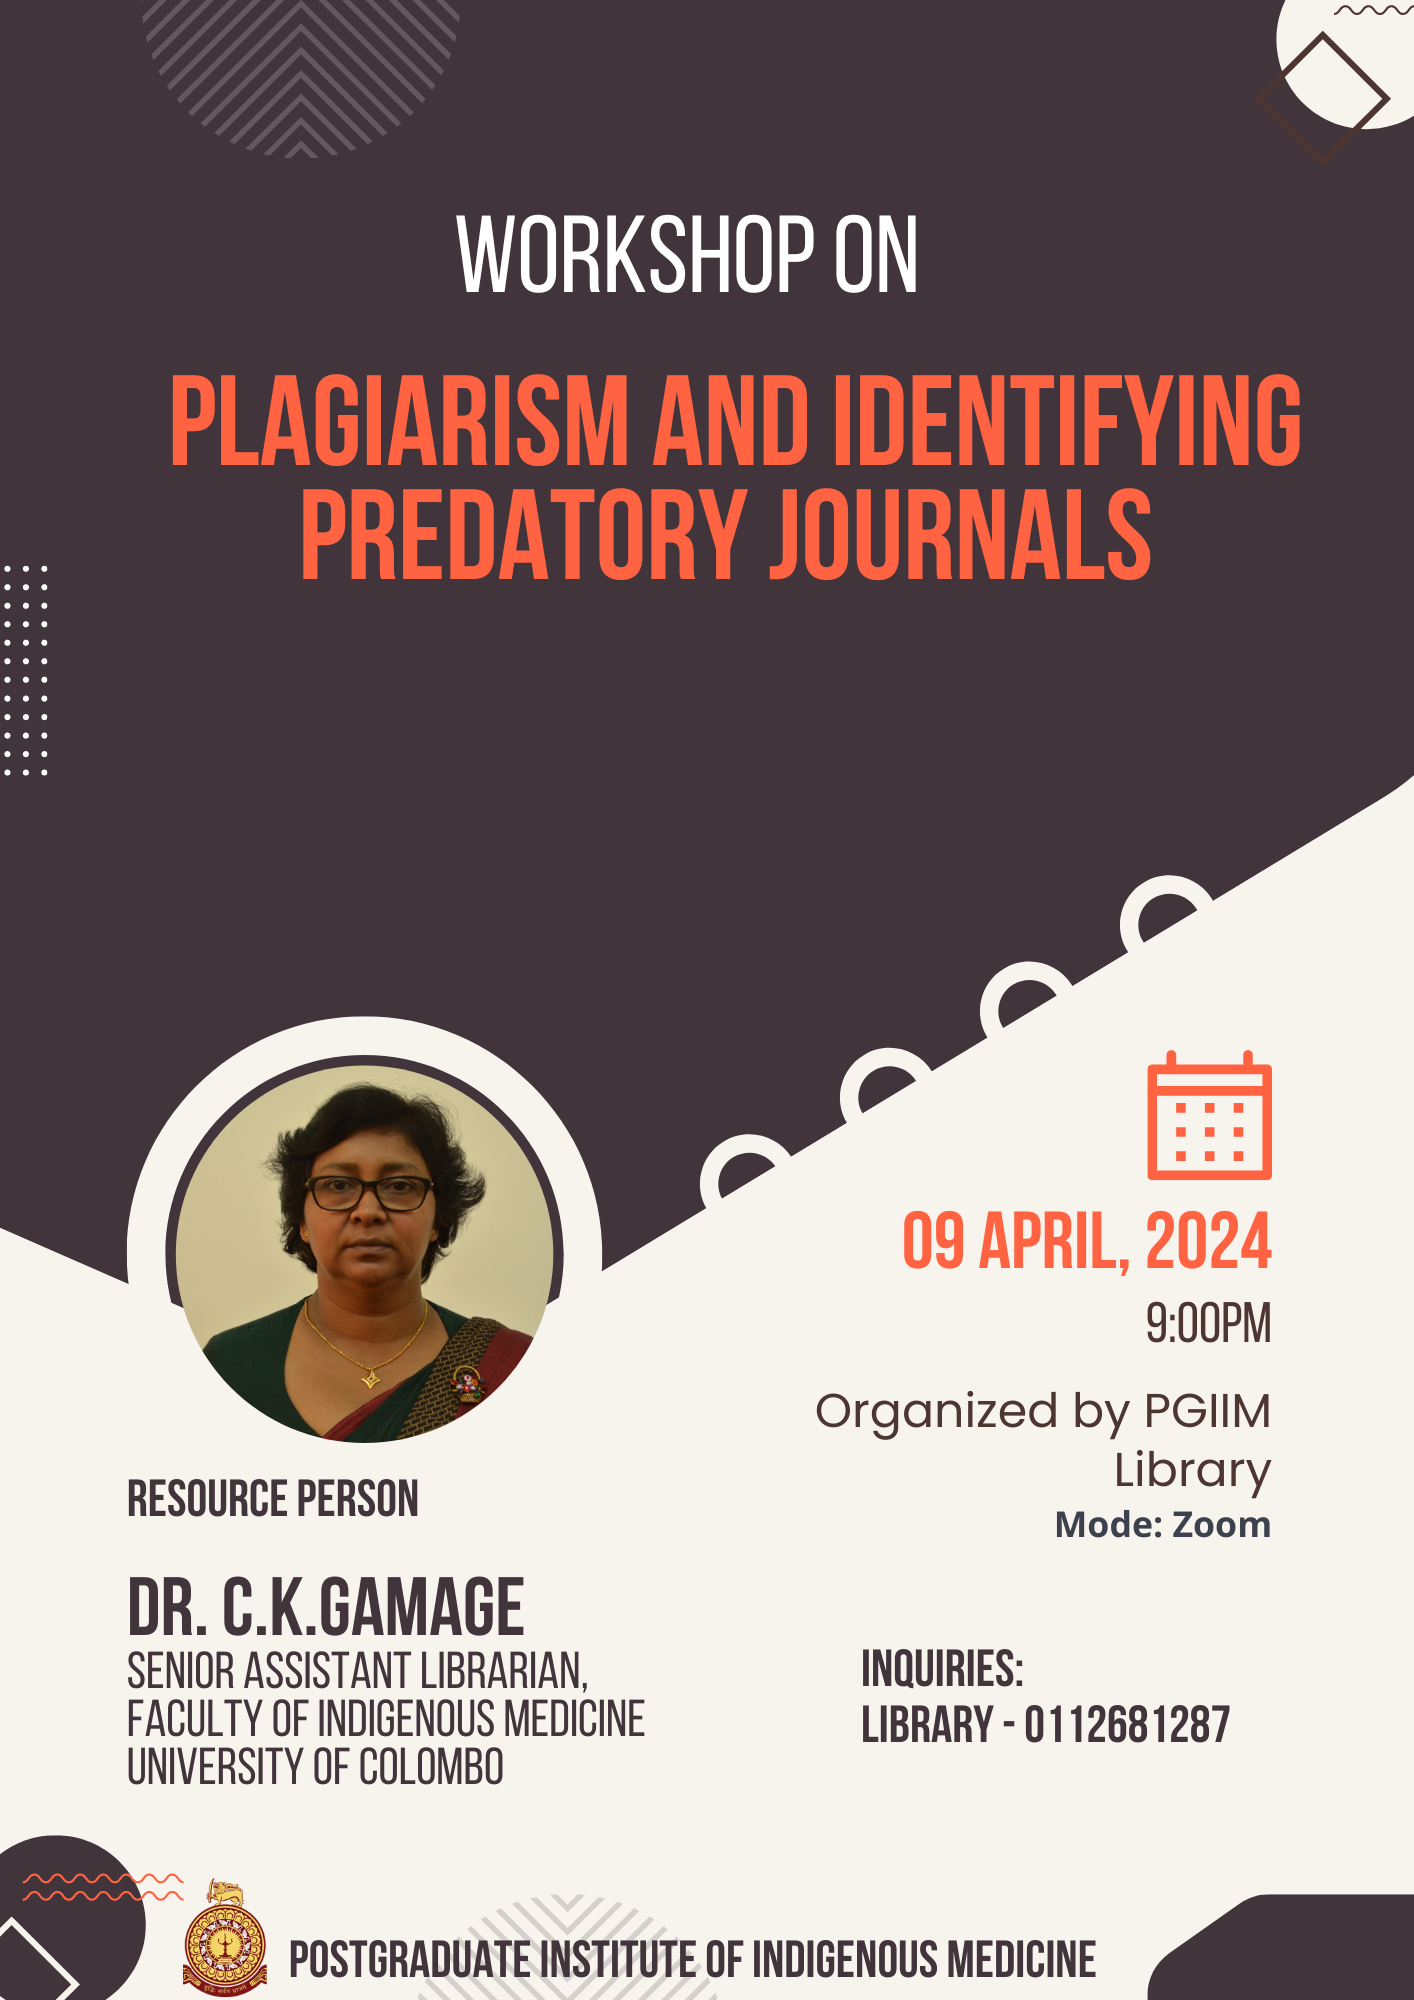 Workshop on Identifying Plagiarism and Predatory Journals